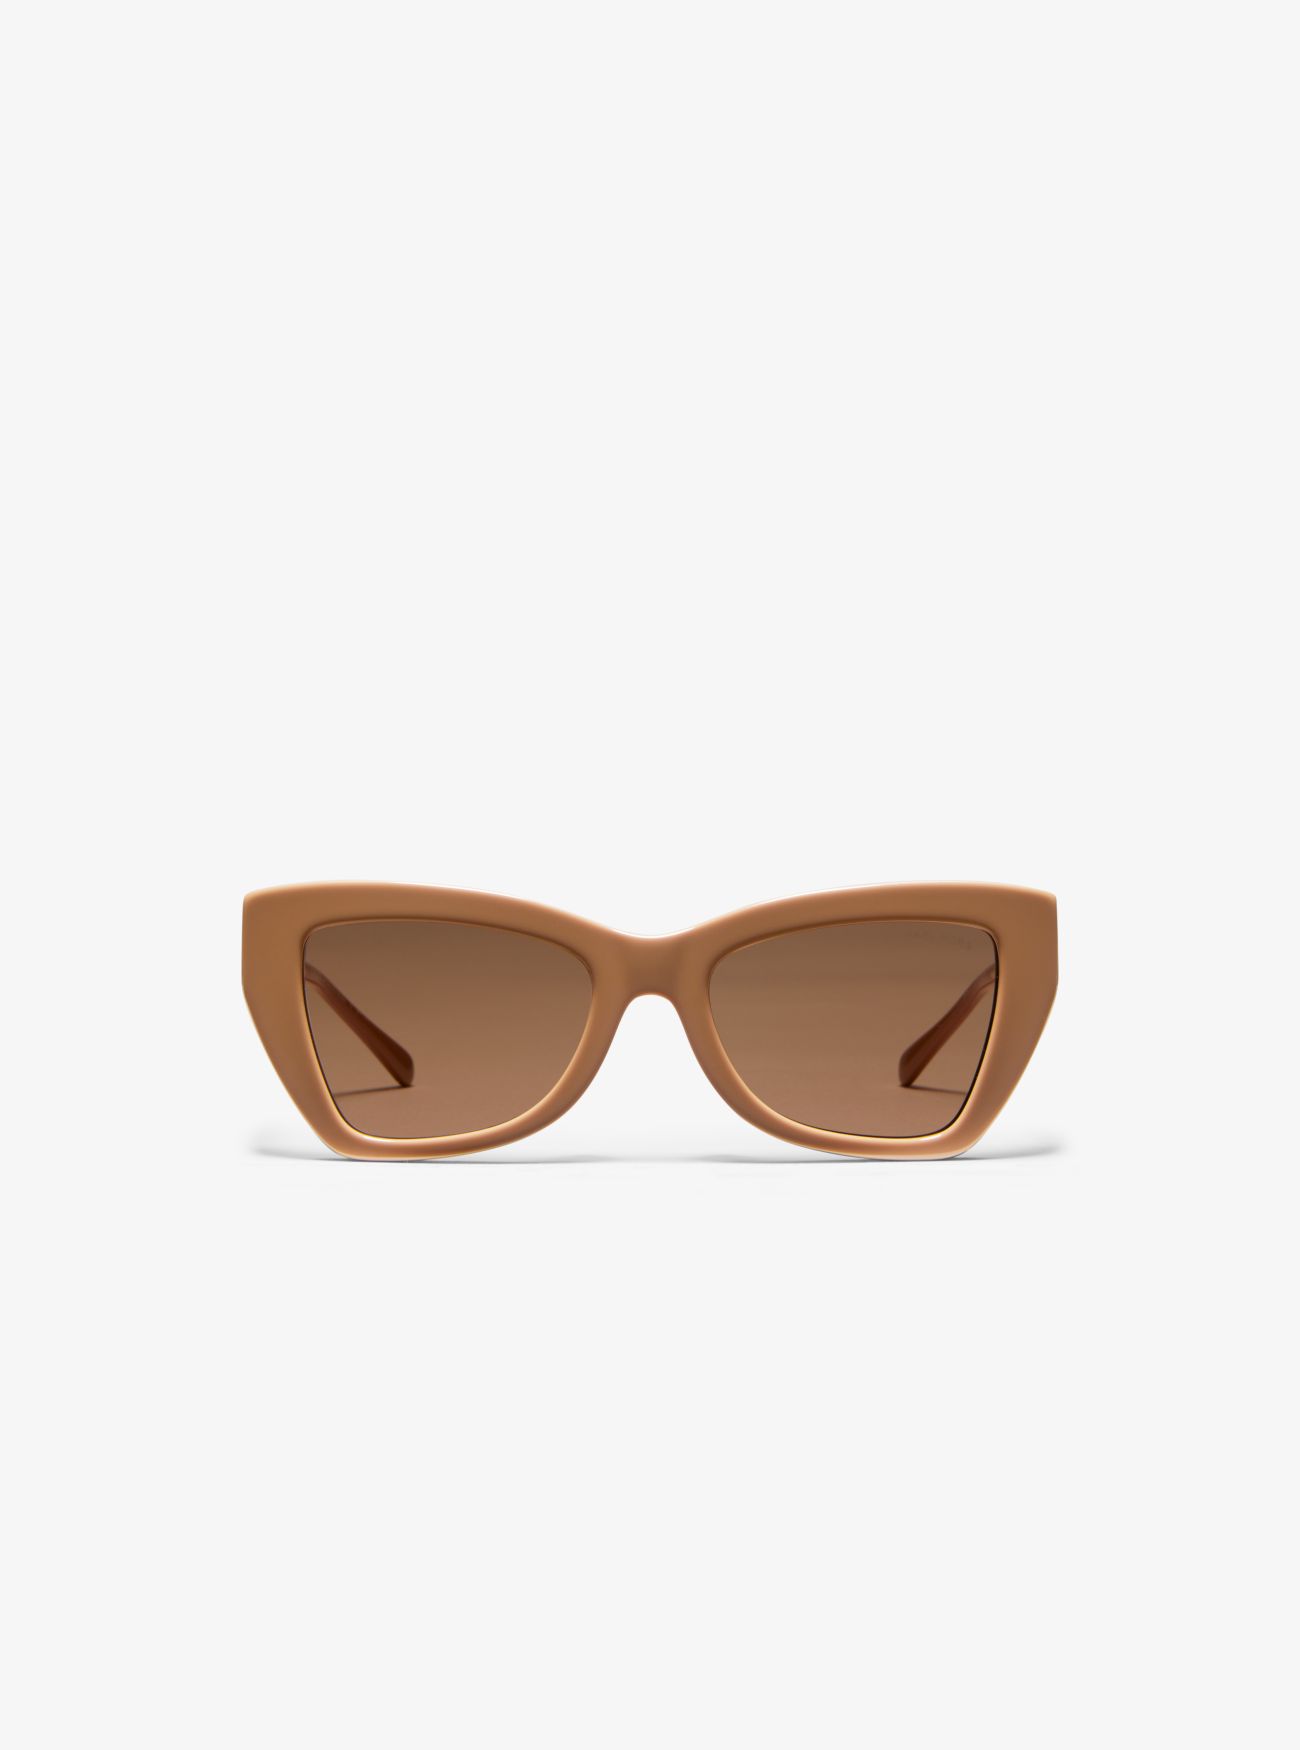 MK Montecito Sunglasses - Brown - Michael Kors